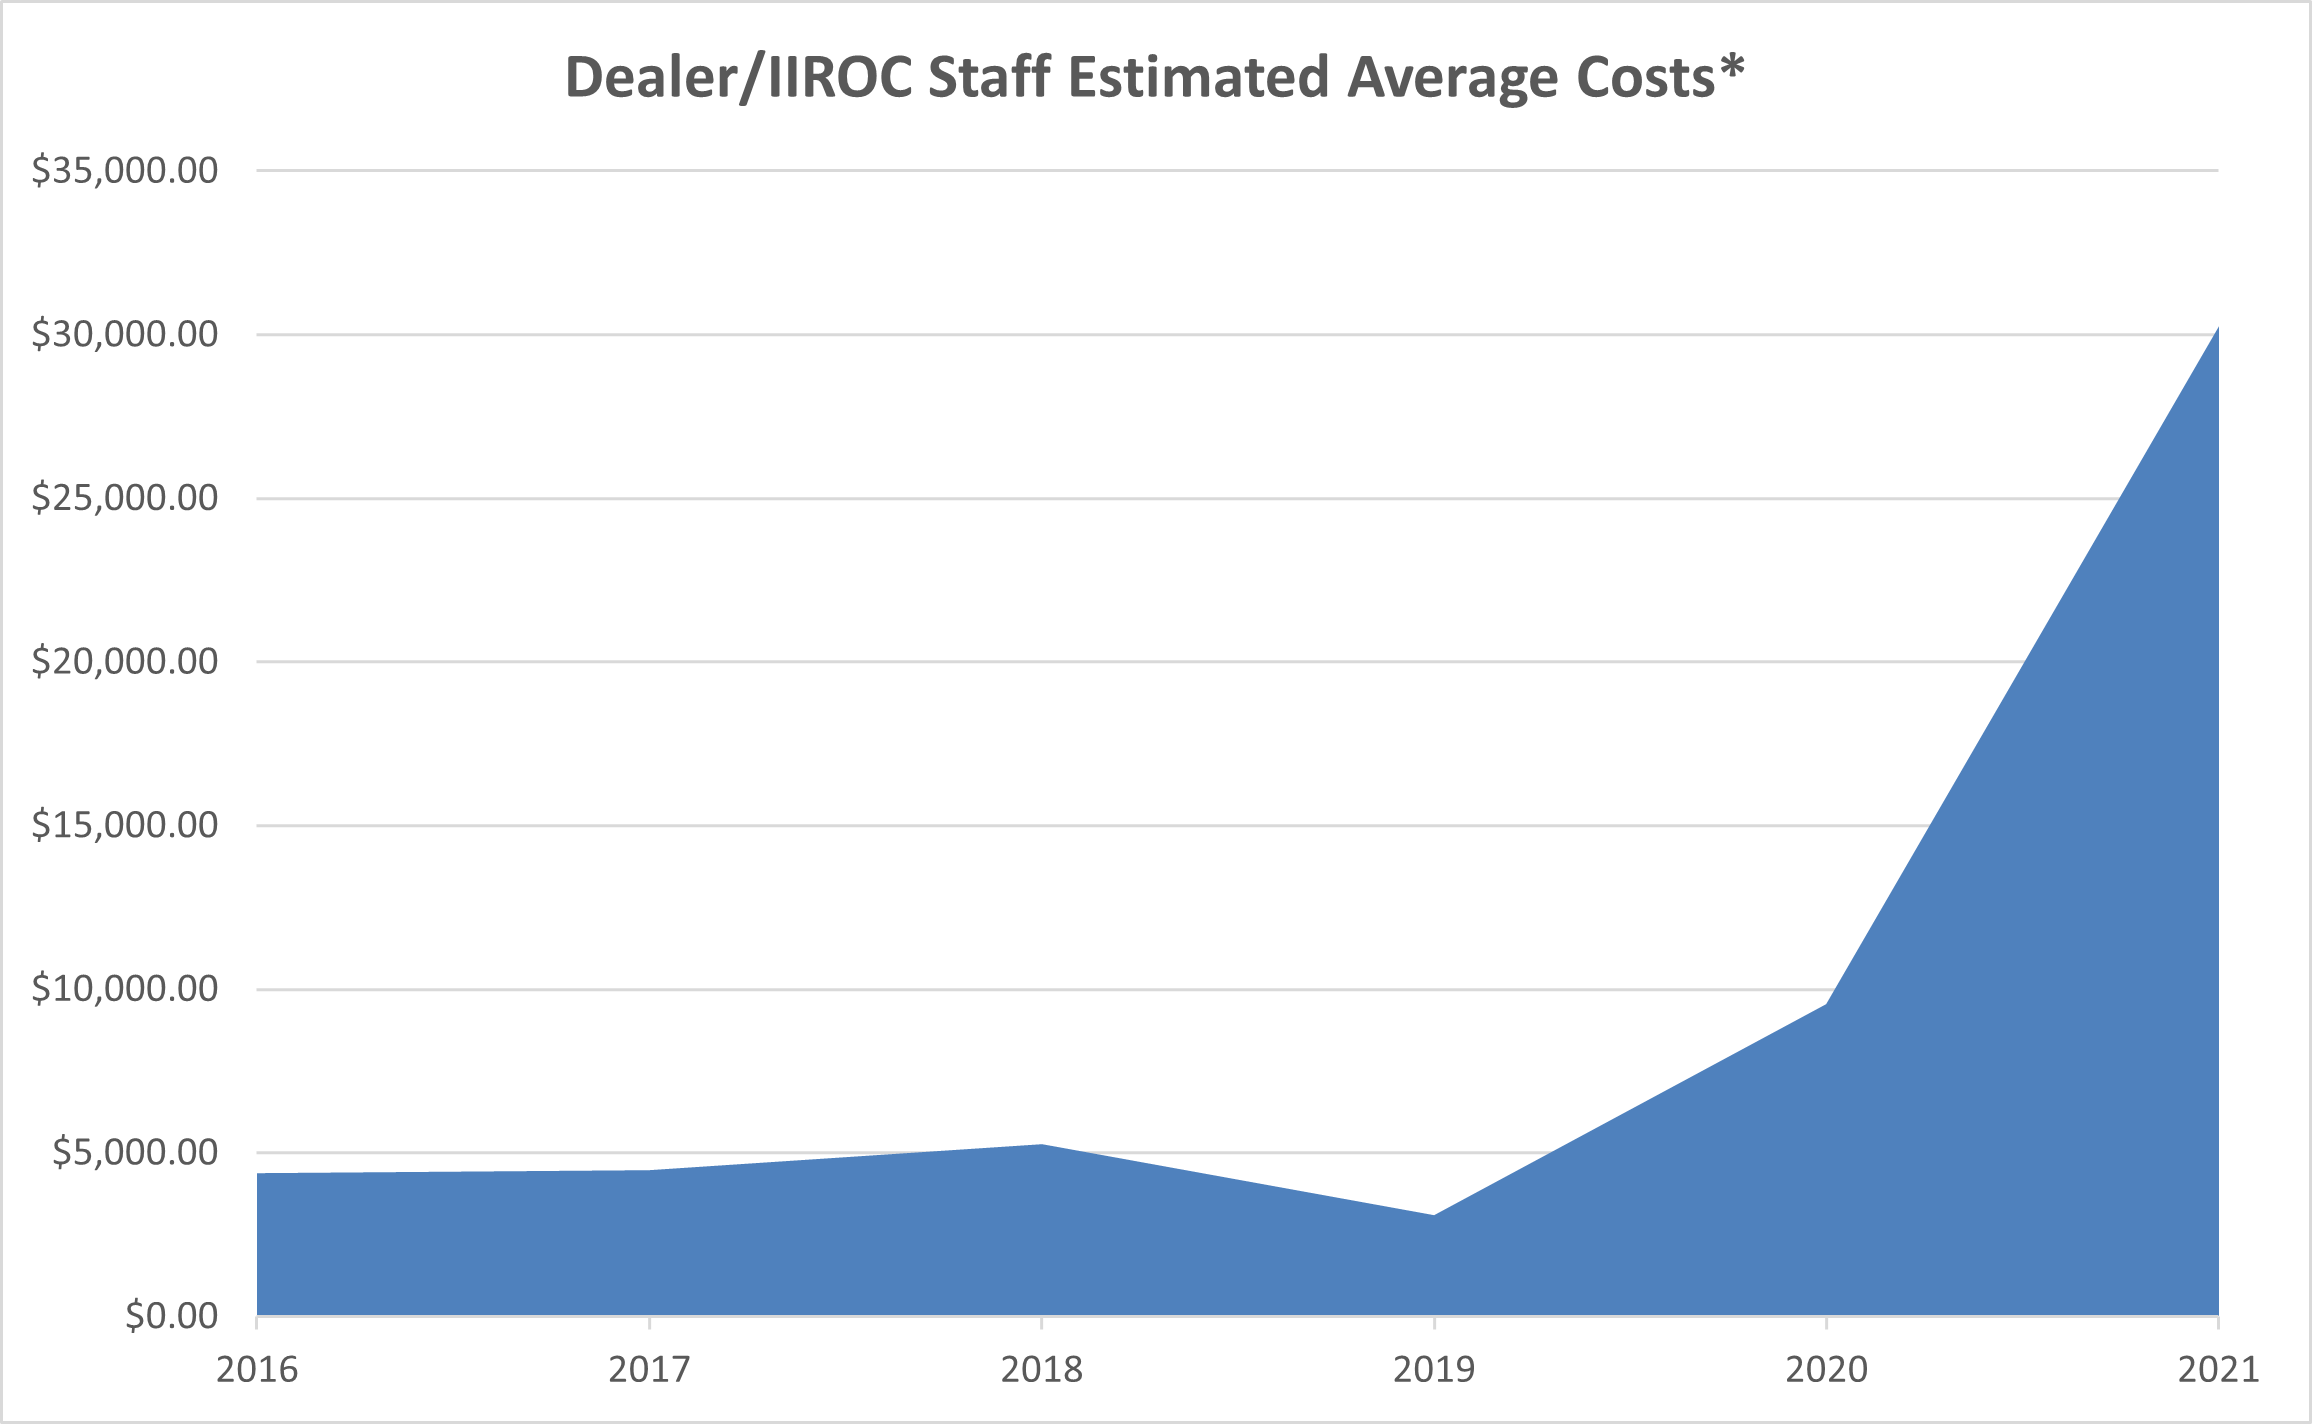 Dealer/IIROC Staff Estimated Average Costs